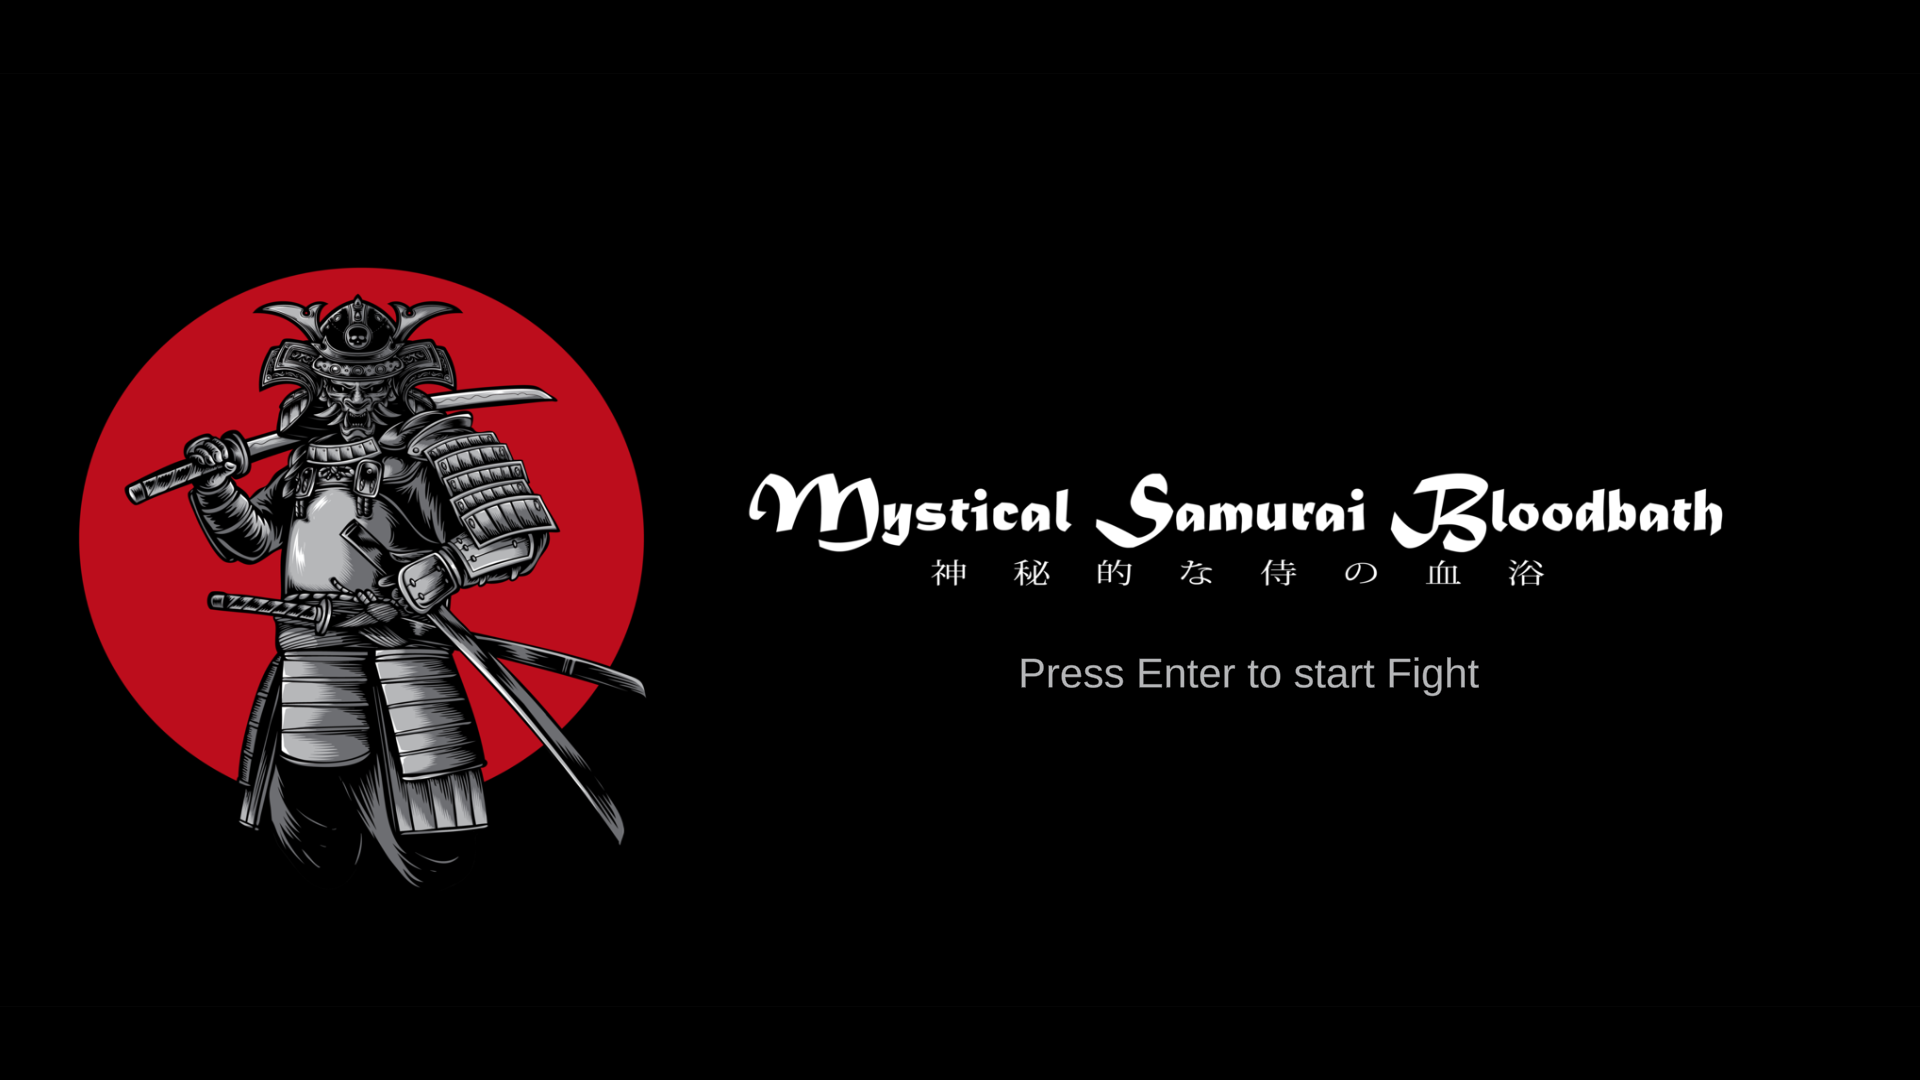 Mystical Samurai Bloodbath